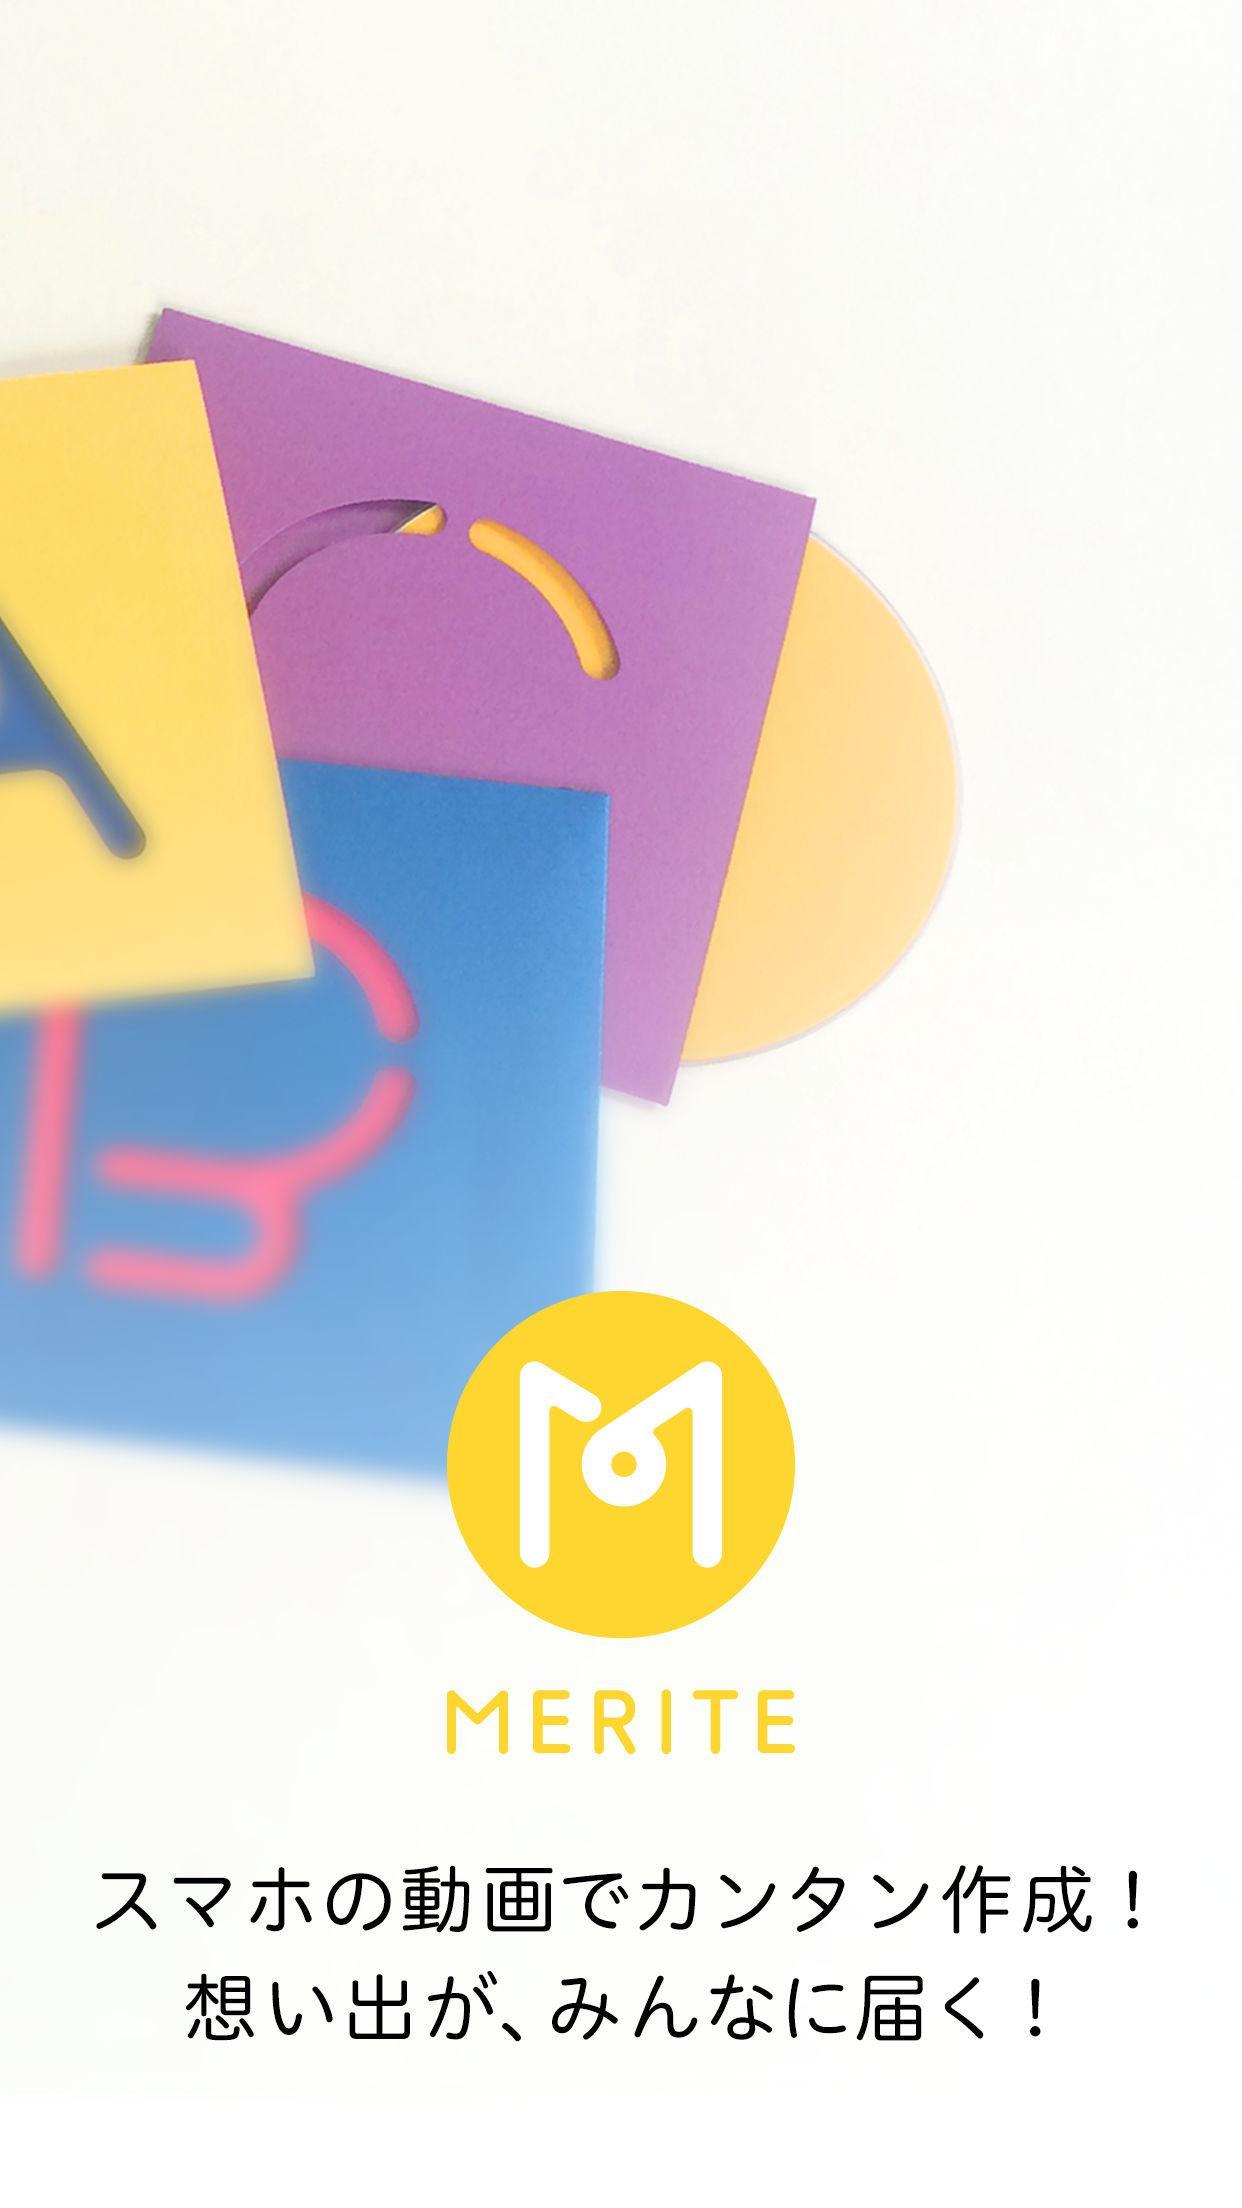 MERITE（メリテ） - スマホの動画からDVDを作成 1.3.4 Screenshot 2